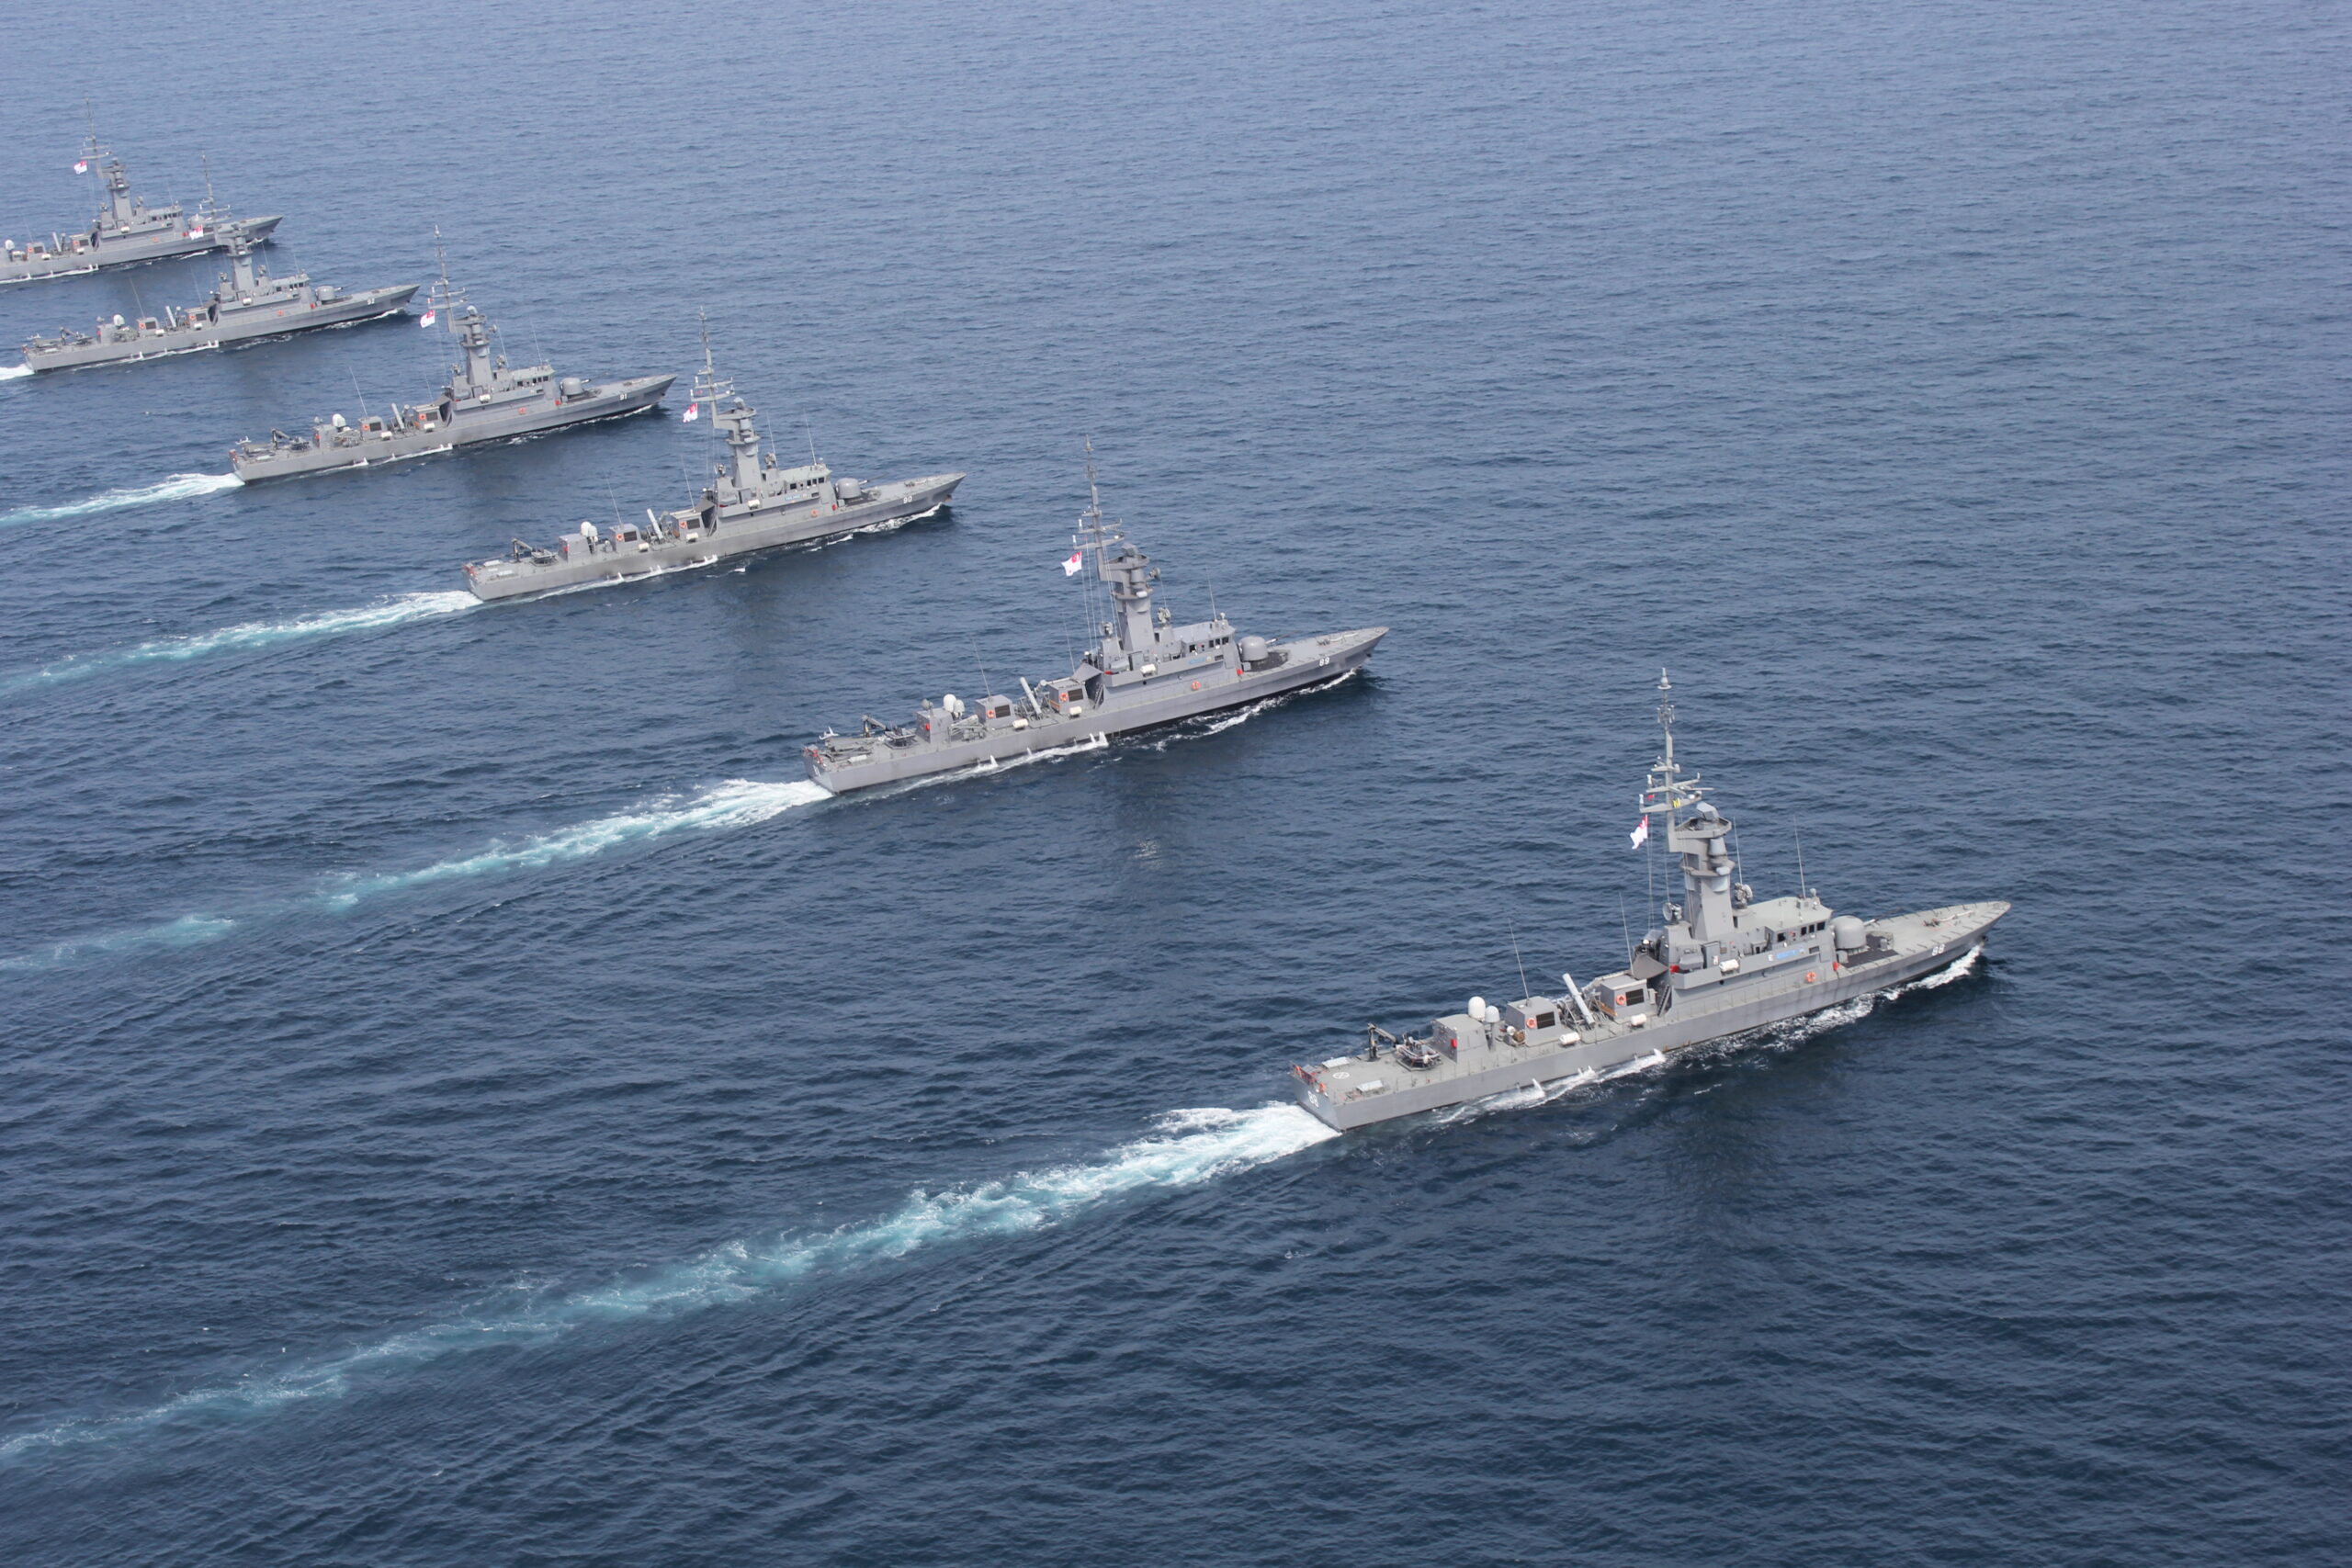 Republic of Singapore Navy's Victory-class missile corvette fleet.